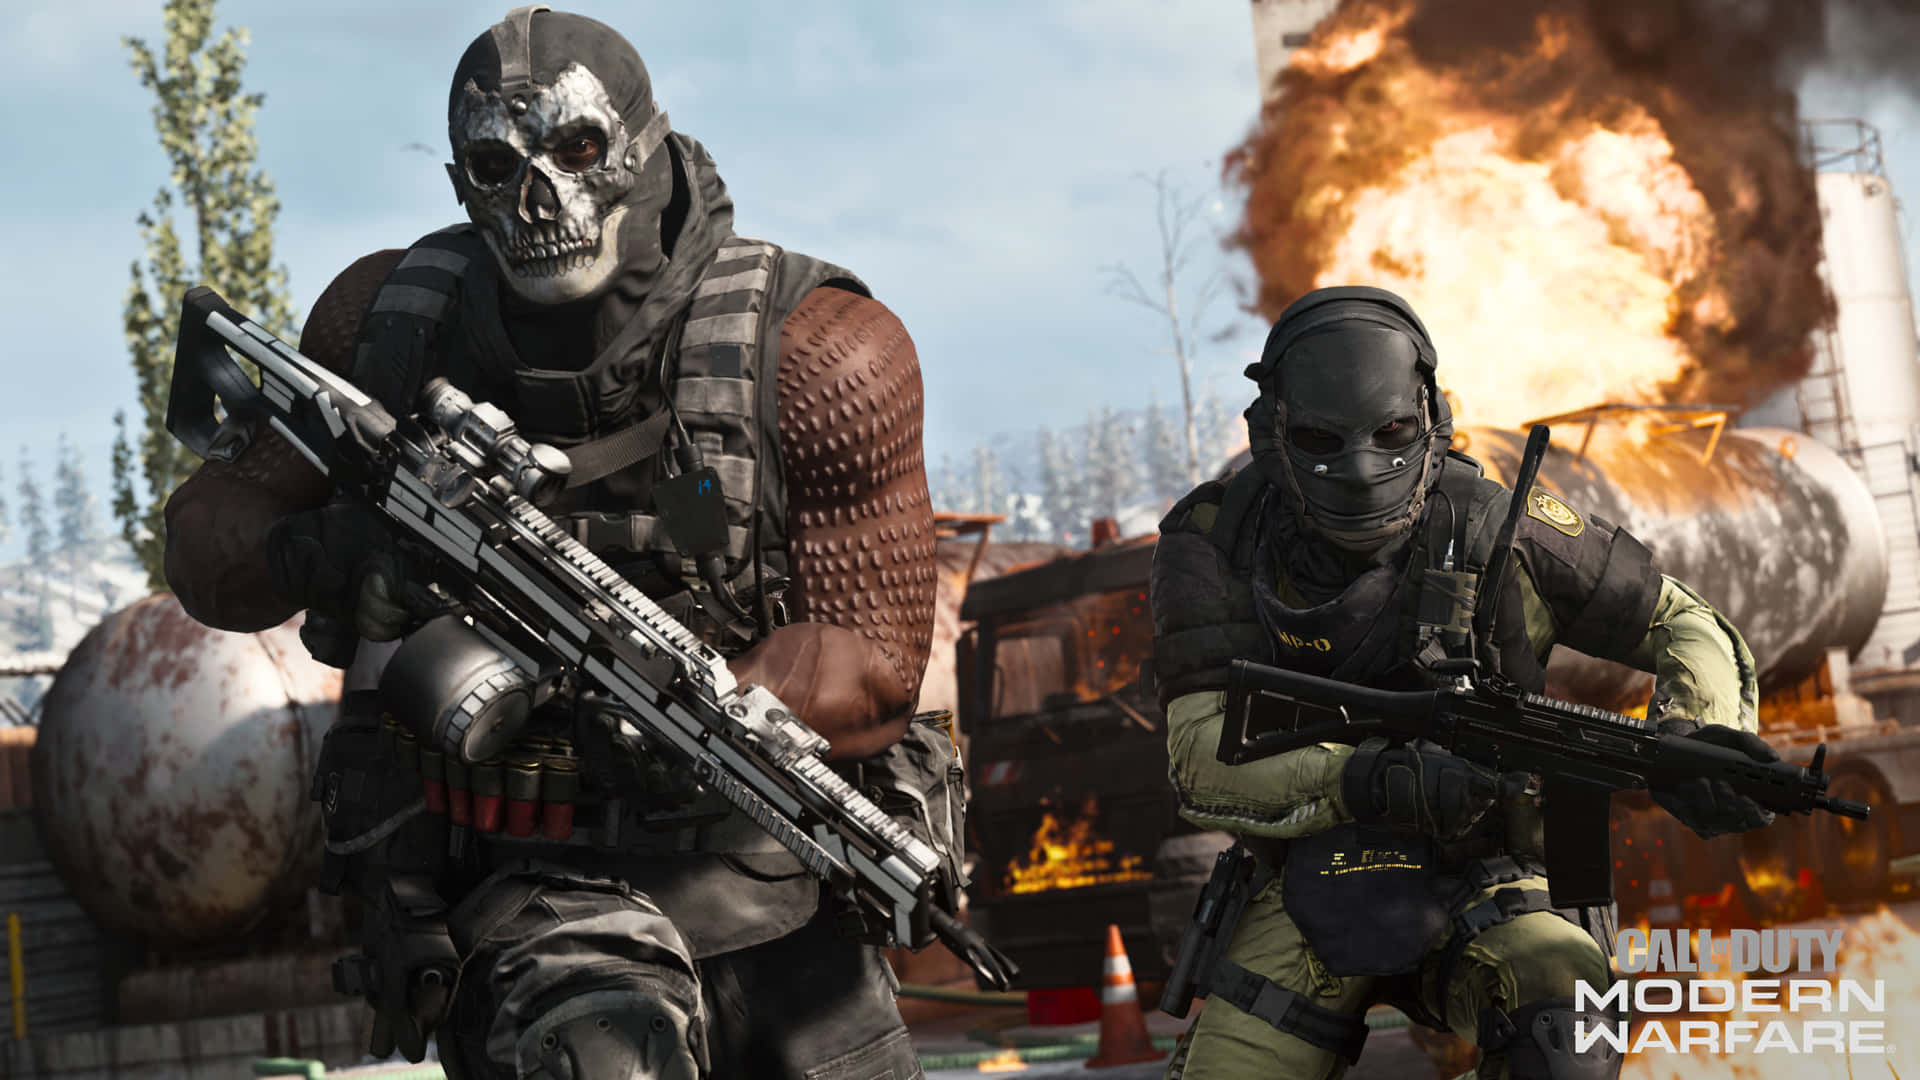 Call Of Duty Modern Warfare Screenshot Wallpaper